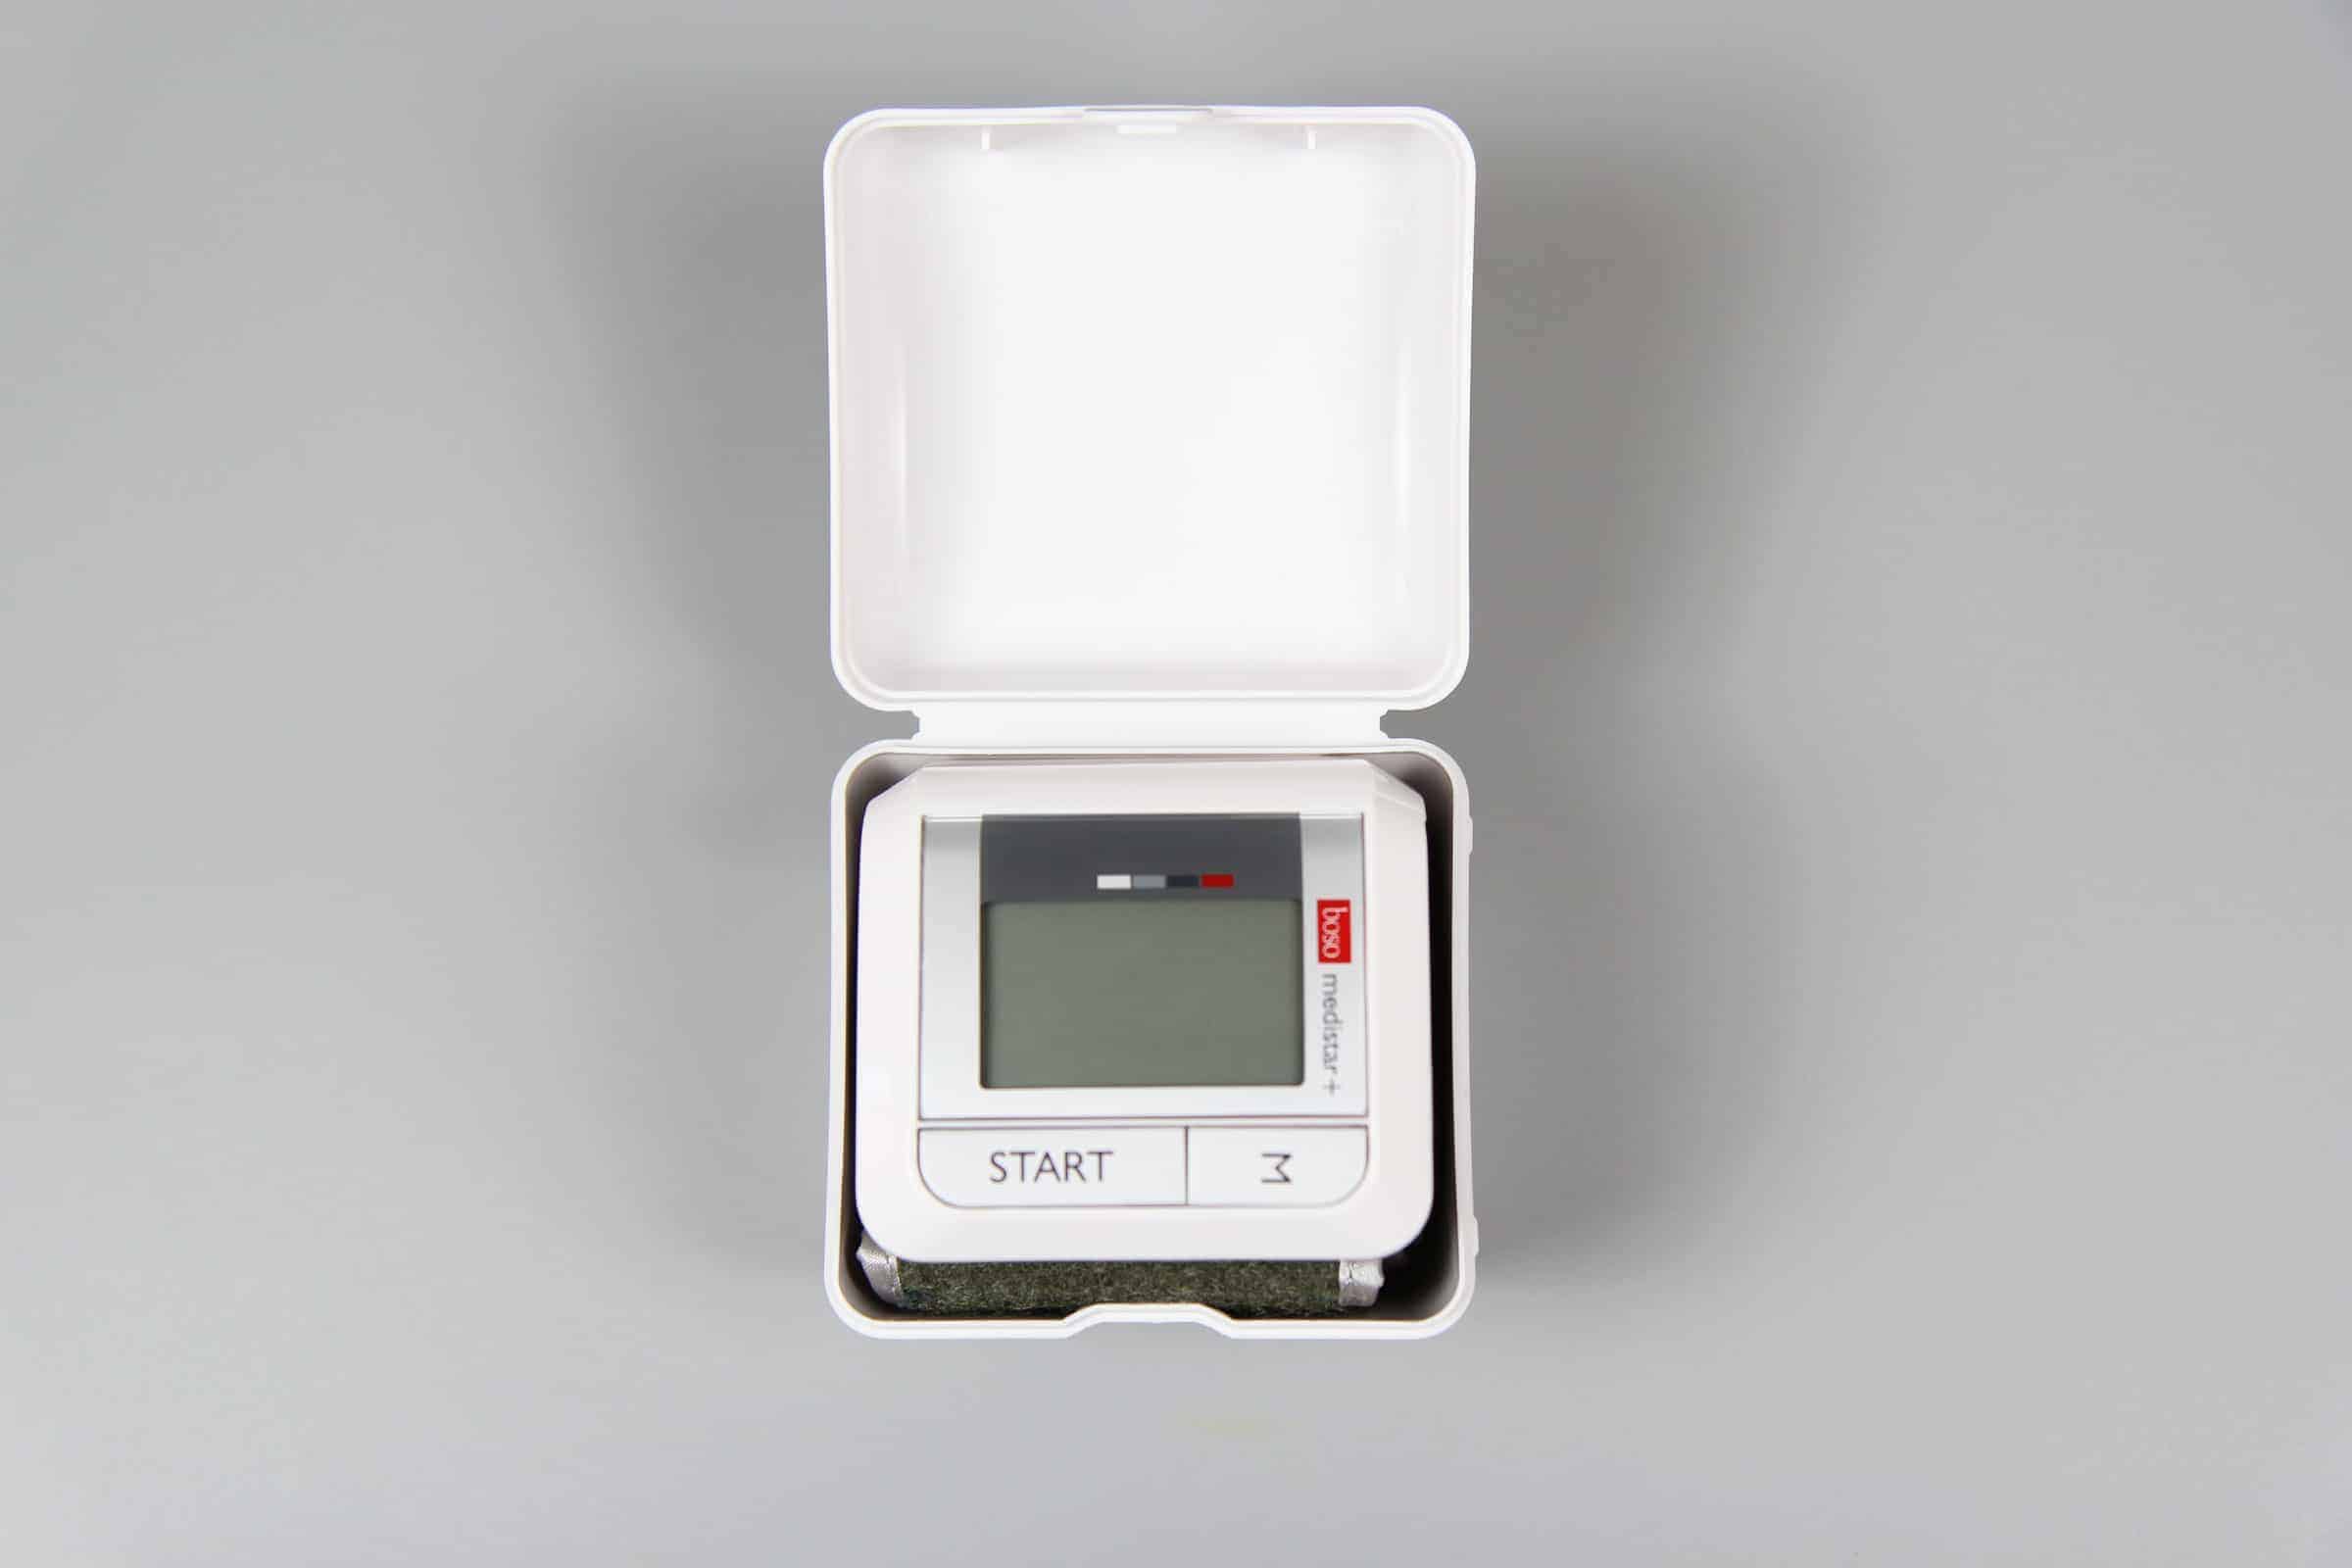 Blutdruckmessgerät Test: Boso Medistar+